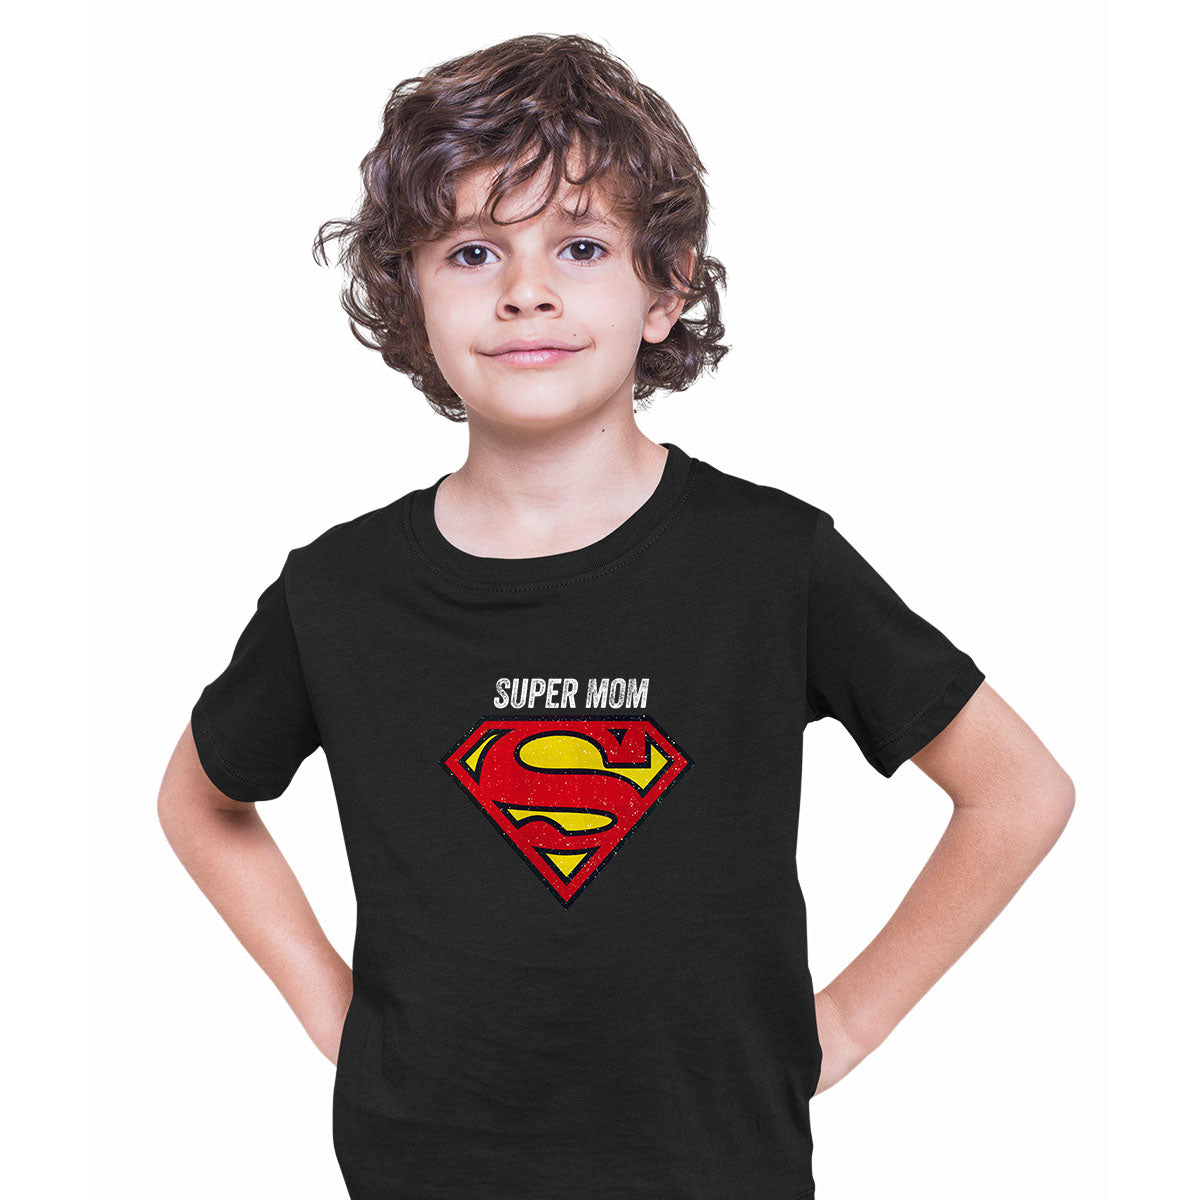 Super Mom Retro Superman DC Comix Action Hero T-shirt for Kids - Kuzi Tees